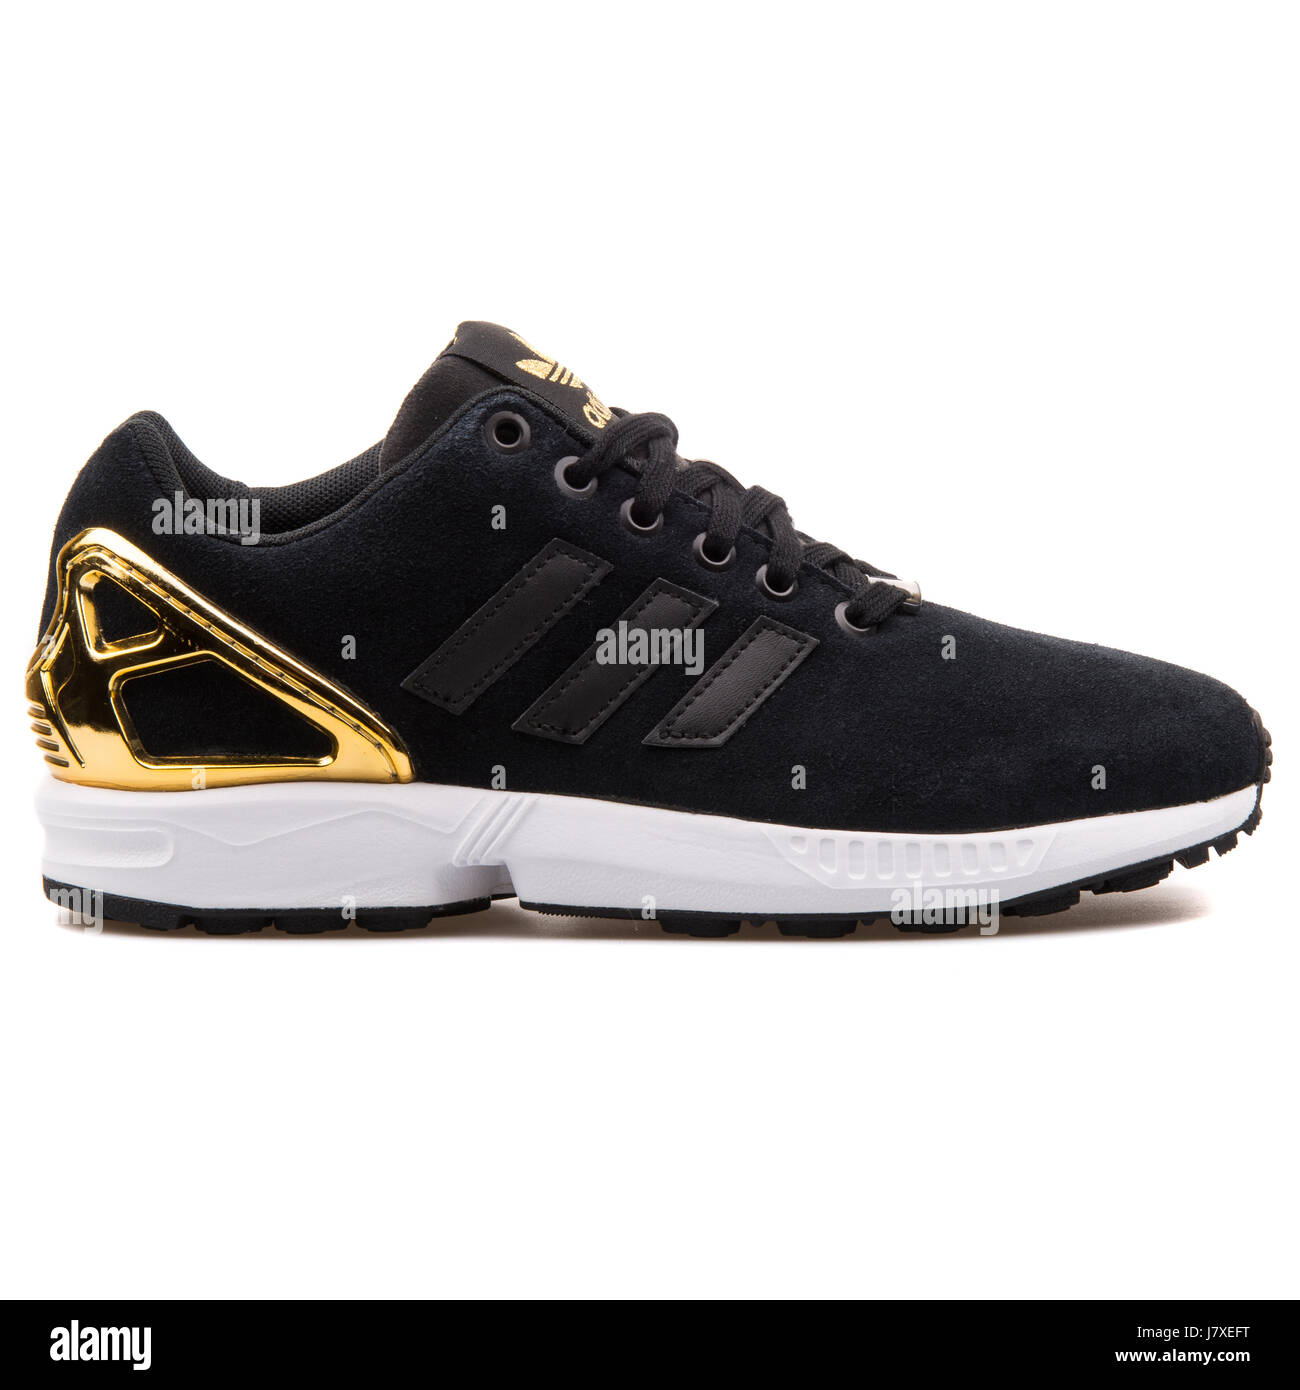 Adidas ZX W negro y oro Mujer Sneakers - B35319 de stock - Alamy